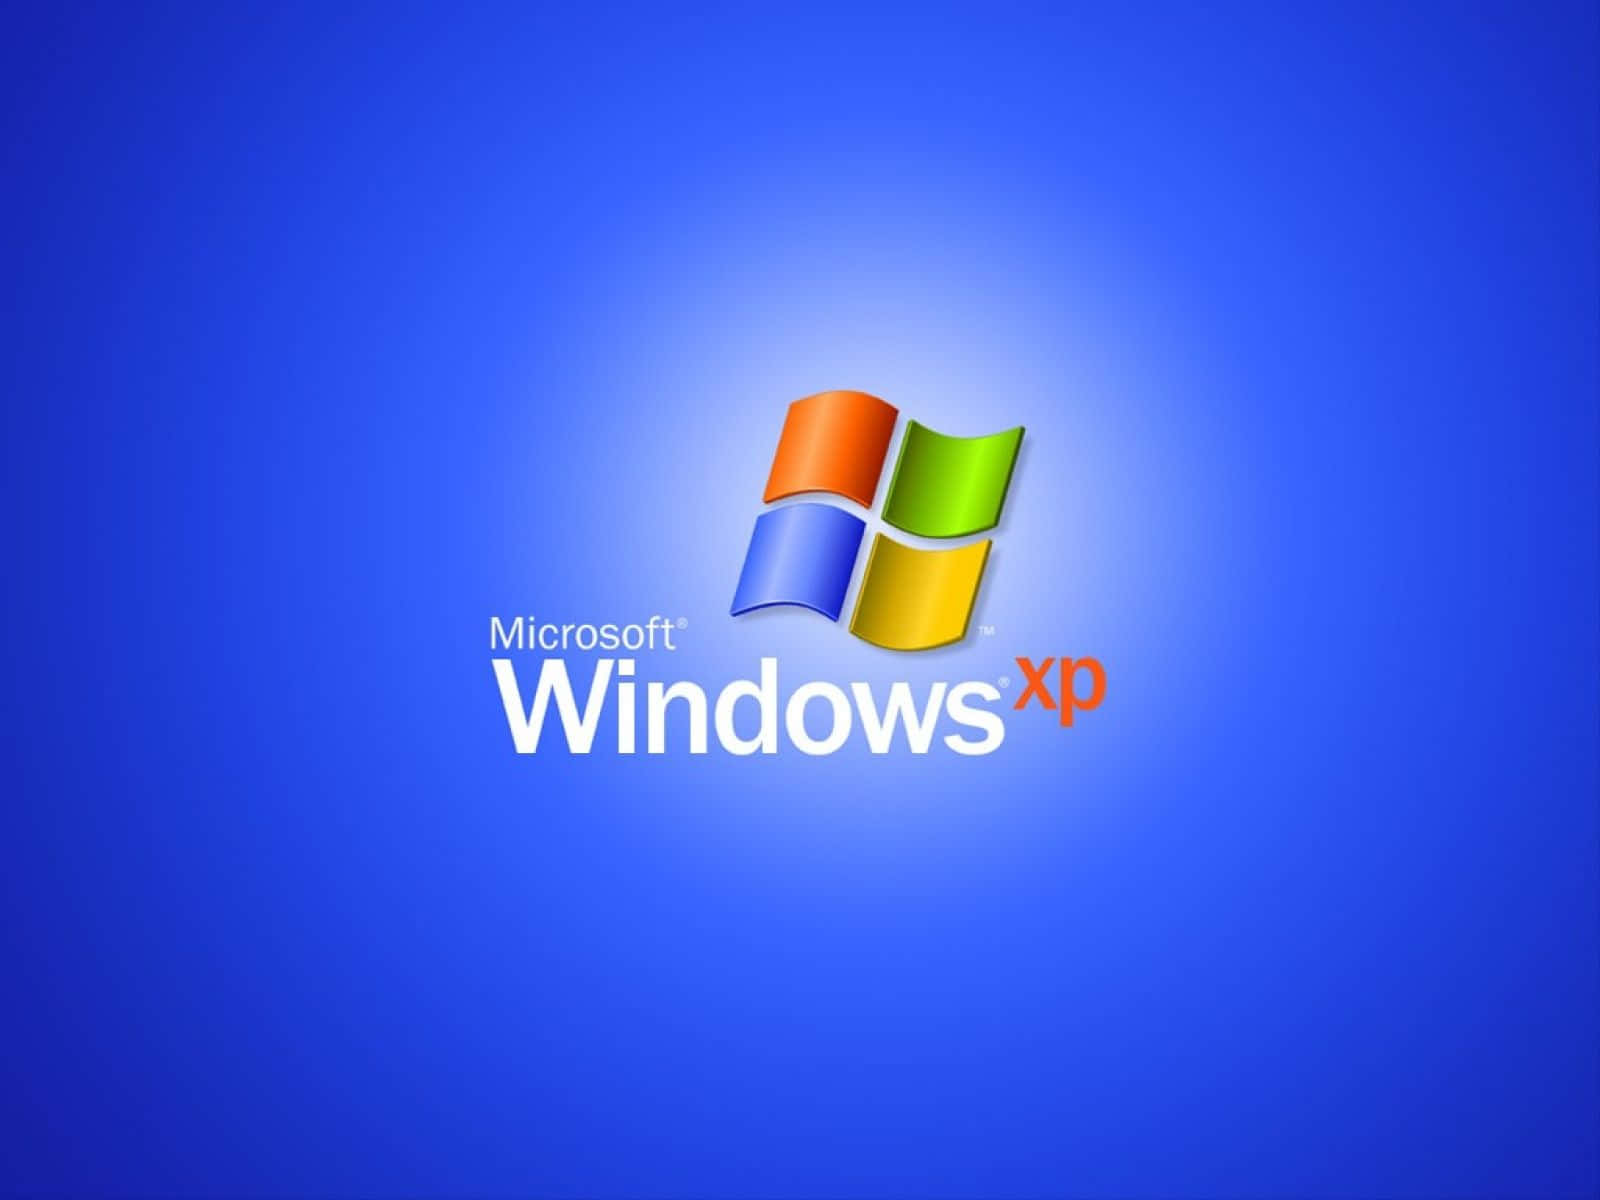 A background picture of a classic Windows Xp desktop